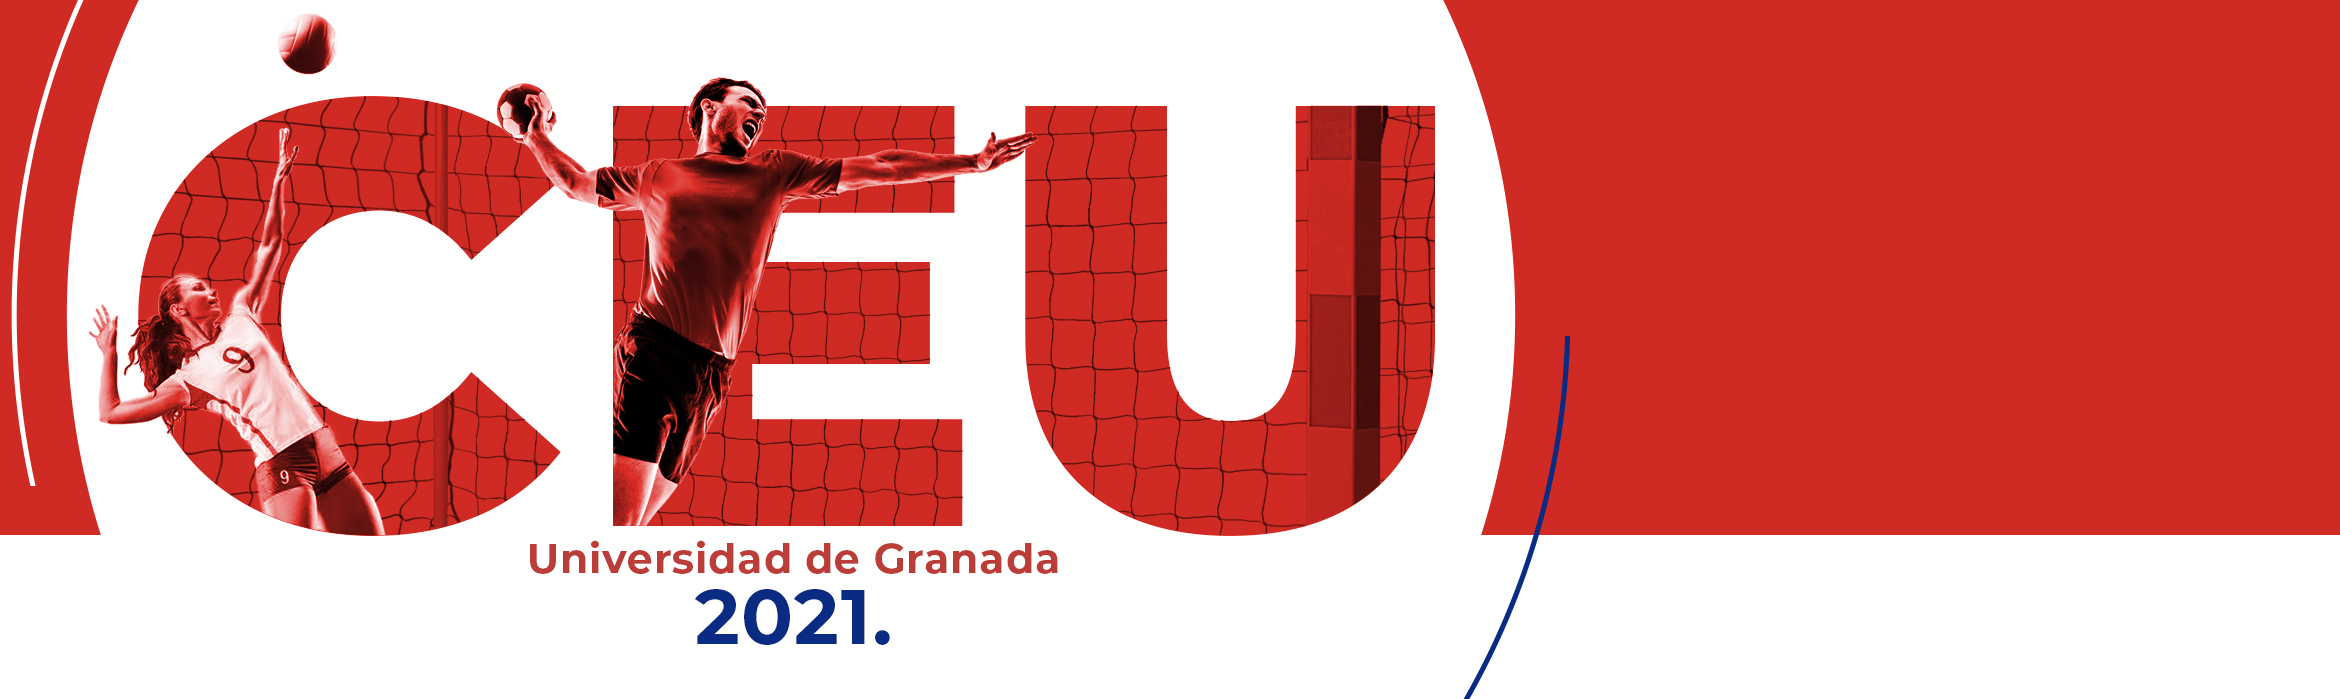 Campeonato España Universitario 2020 - 2021 Granada